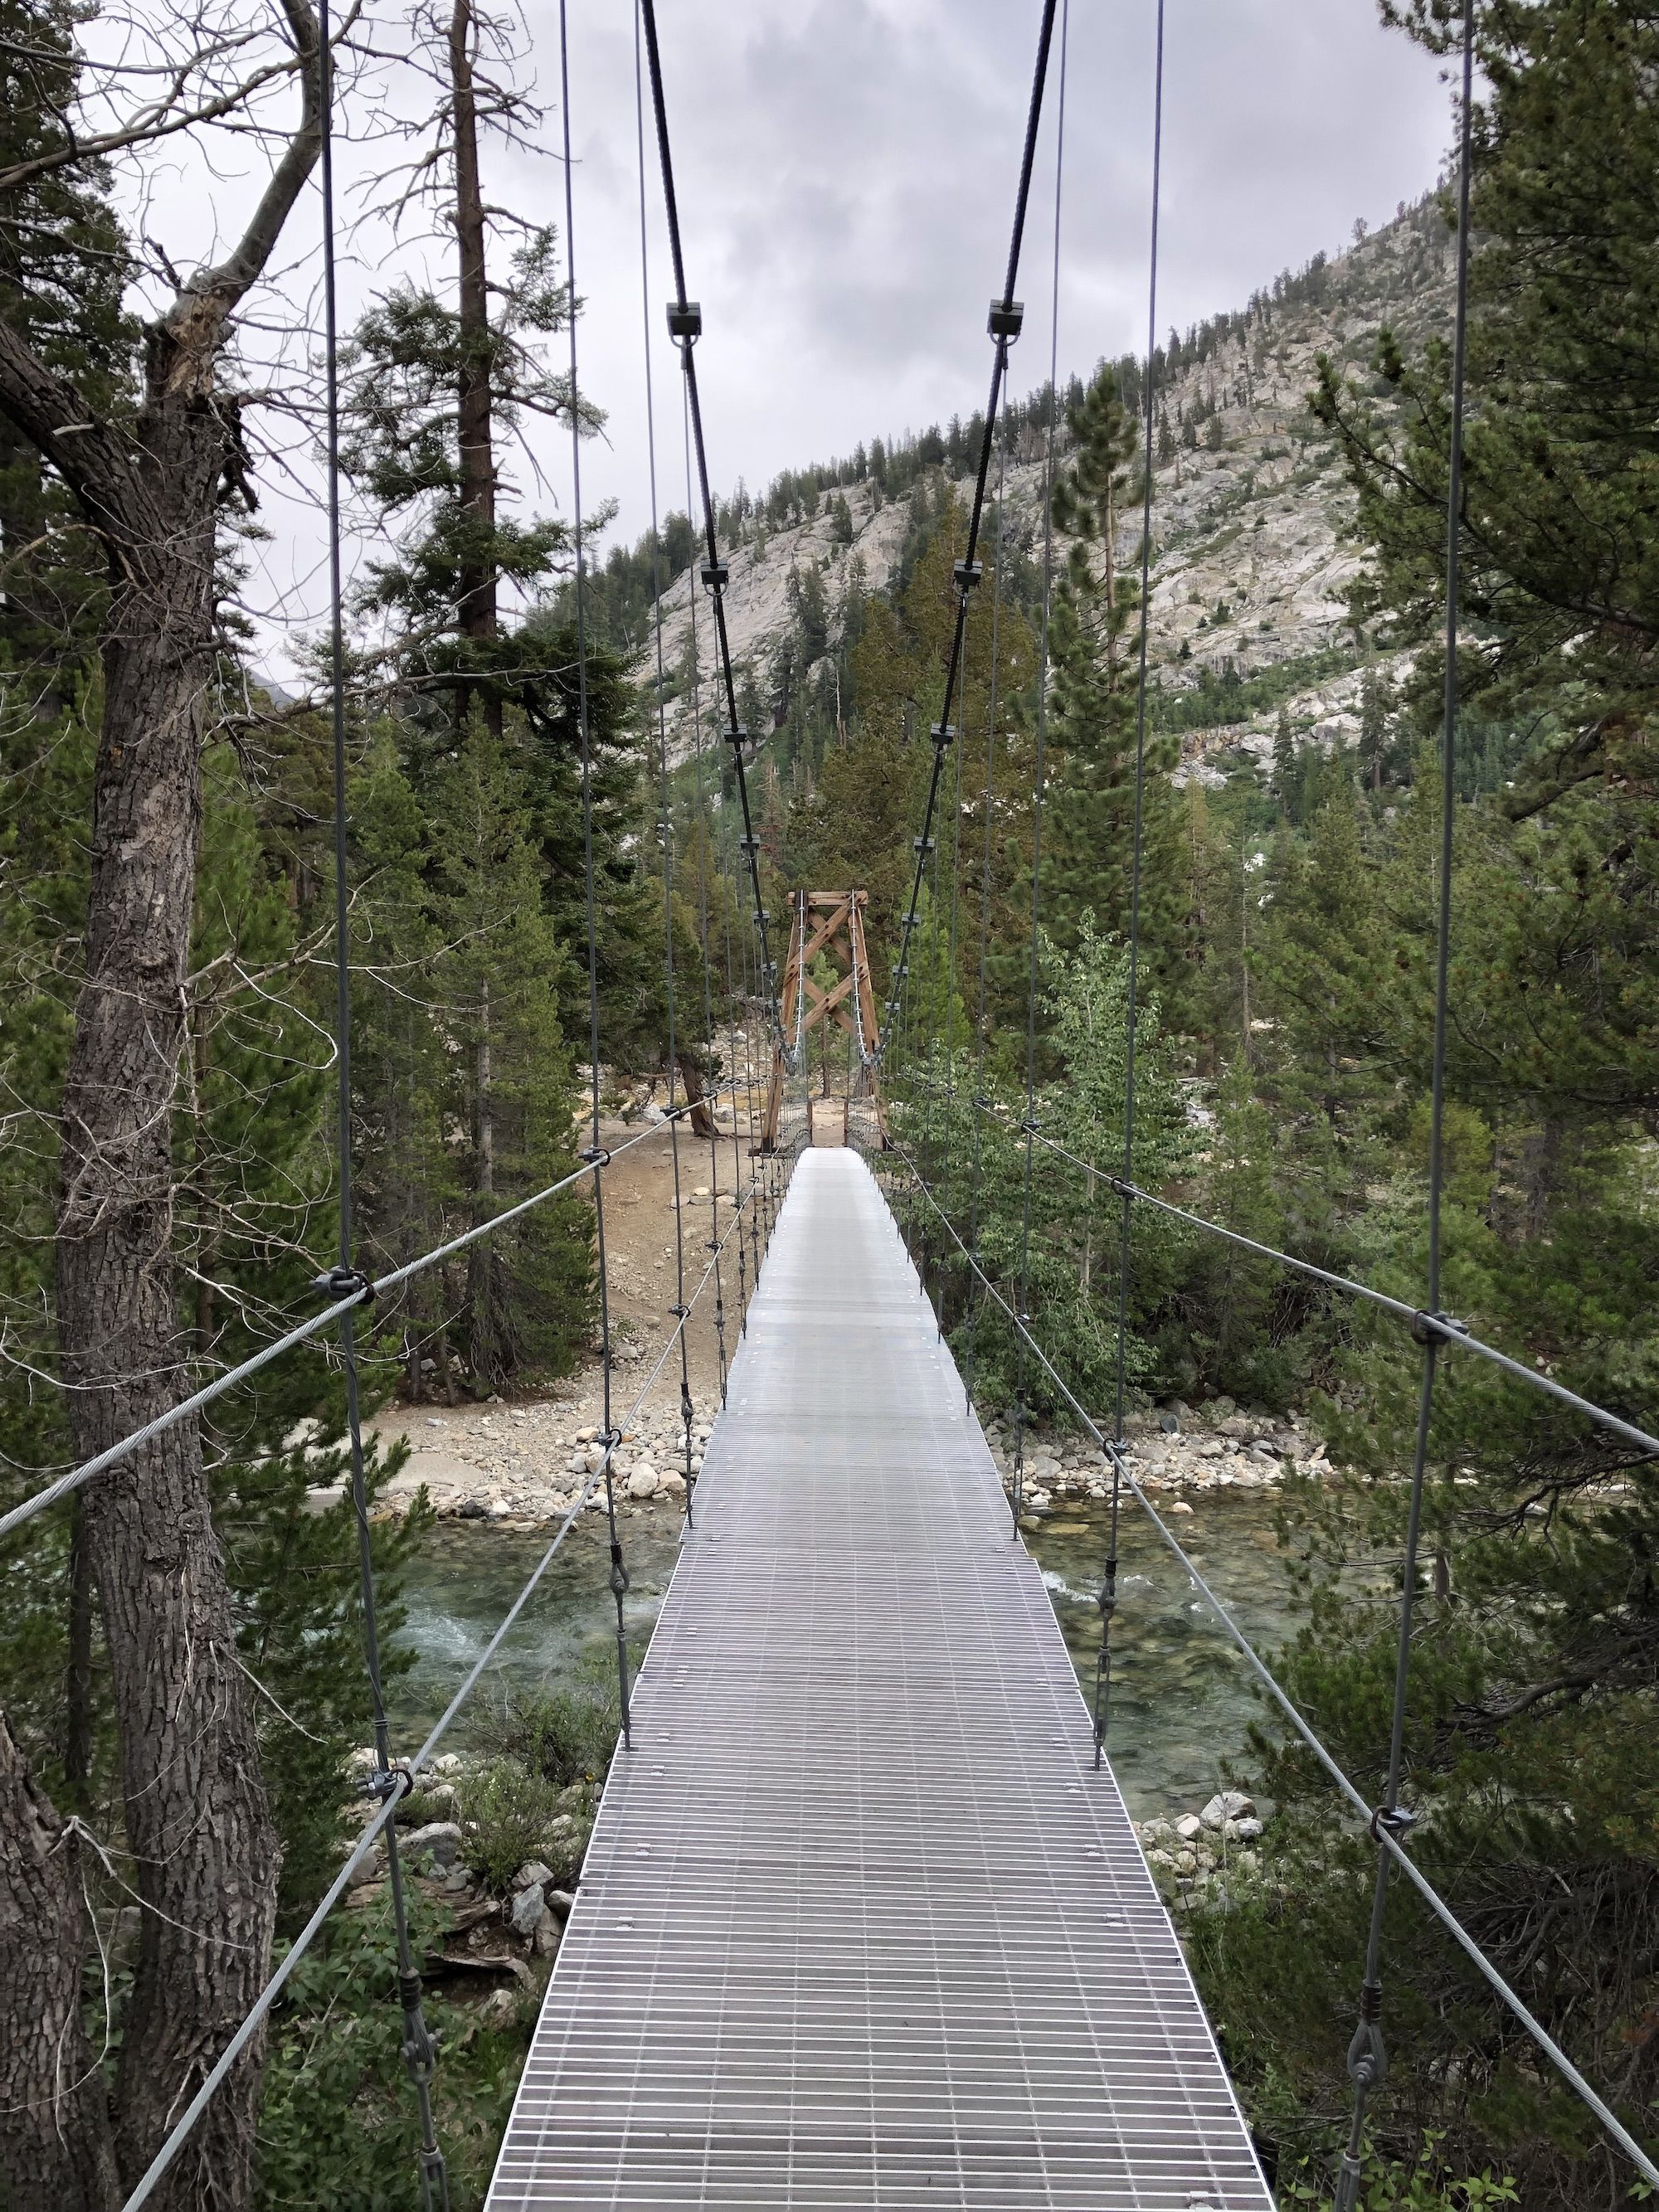 A suspension bridge over a deep river.